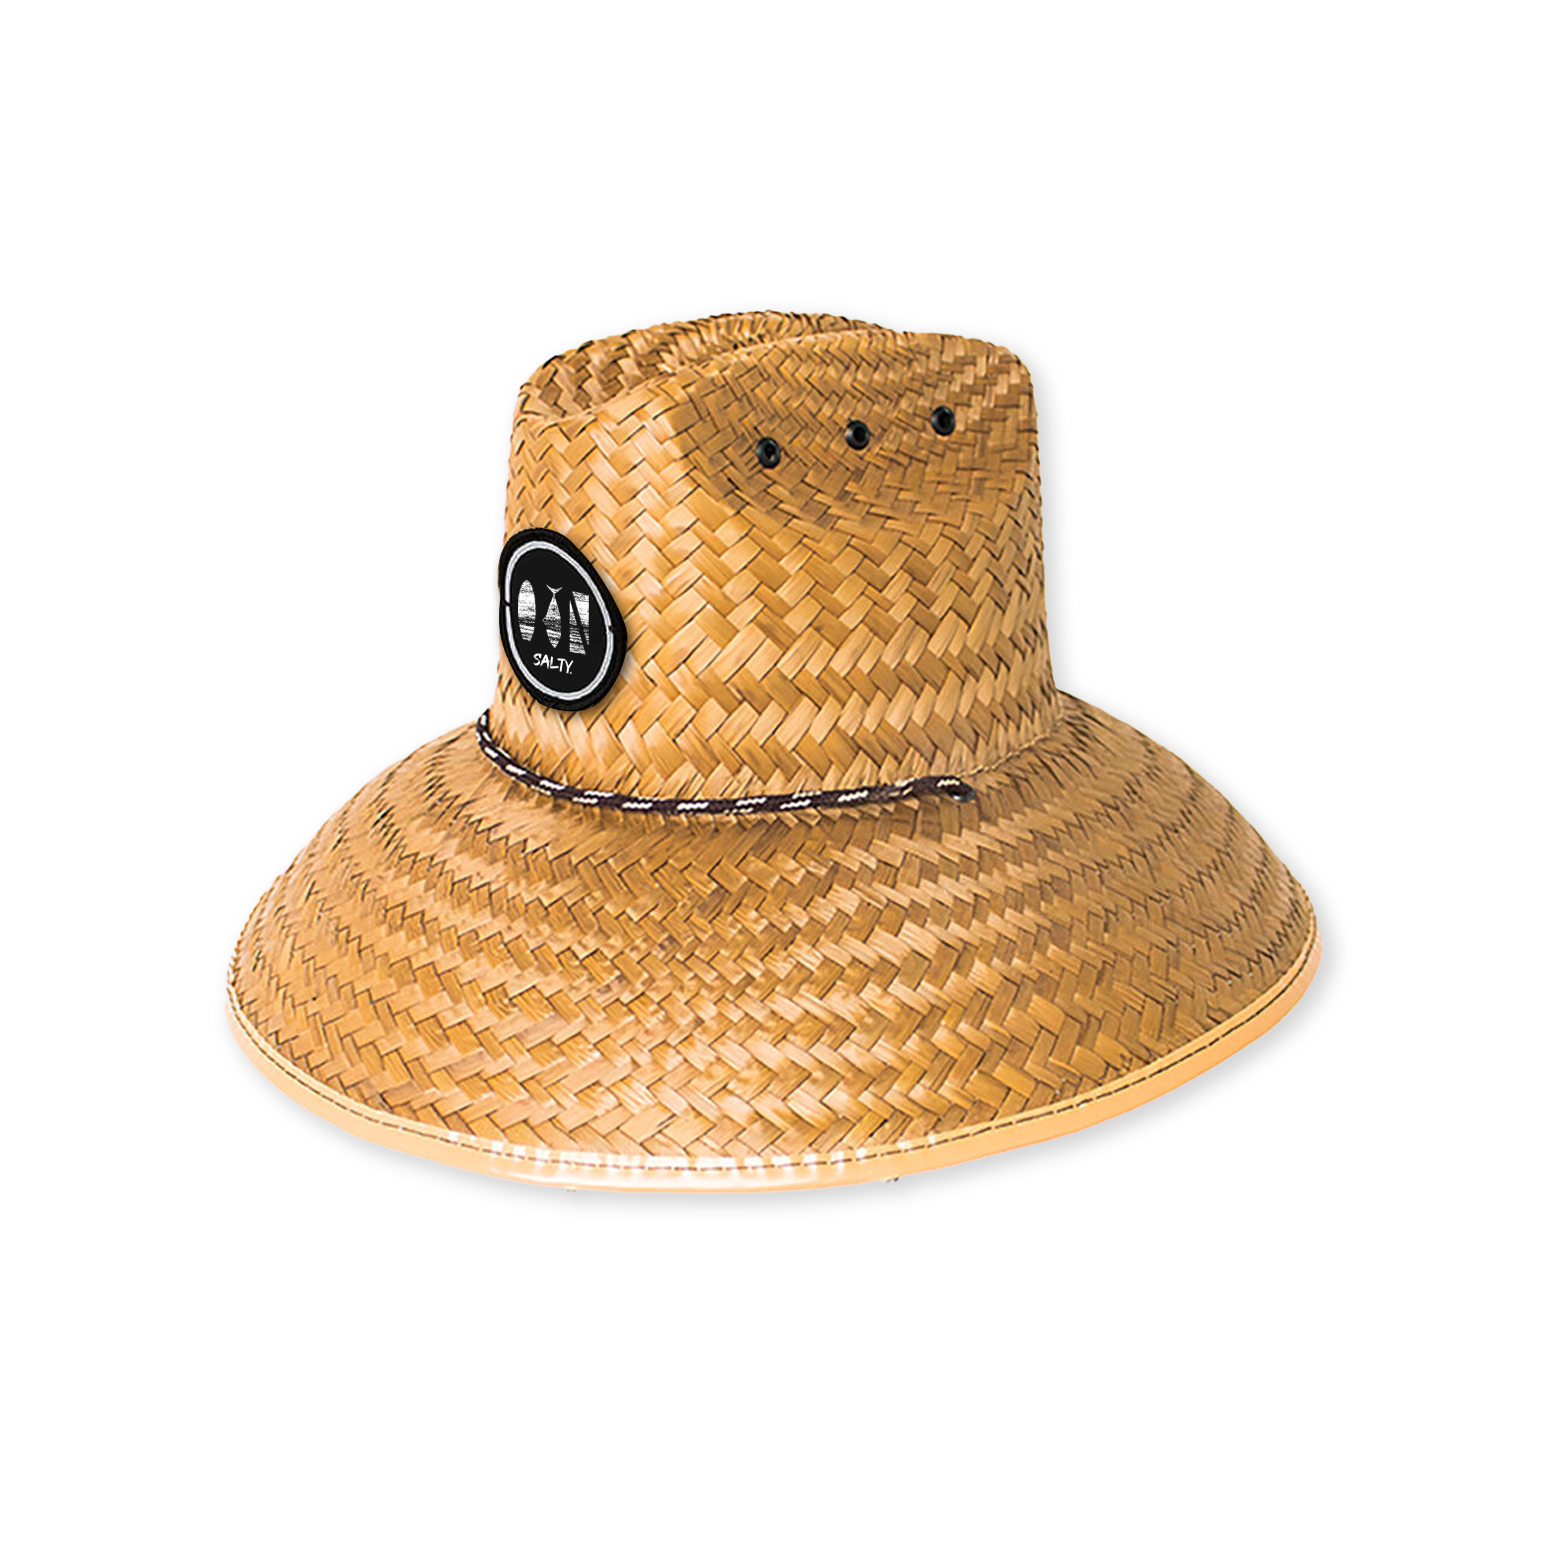 Landscaping | Original Lifeguard Patch Hat